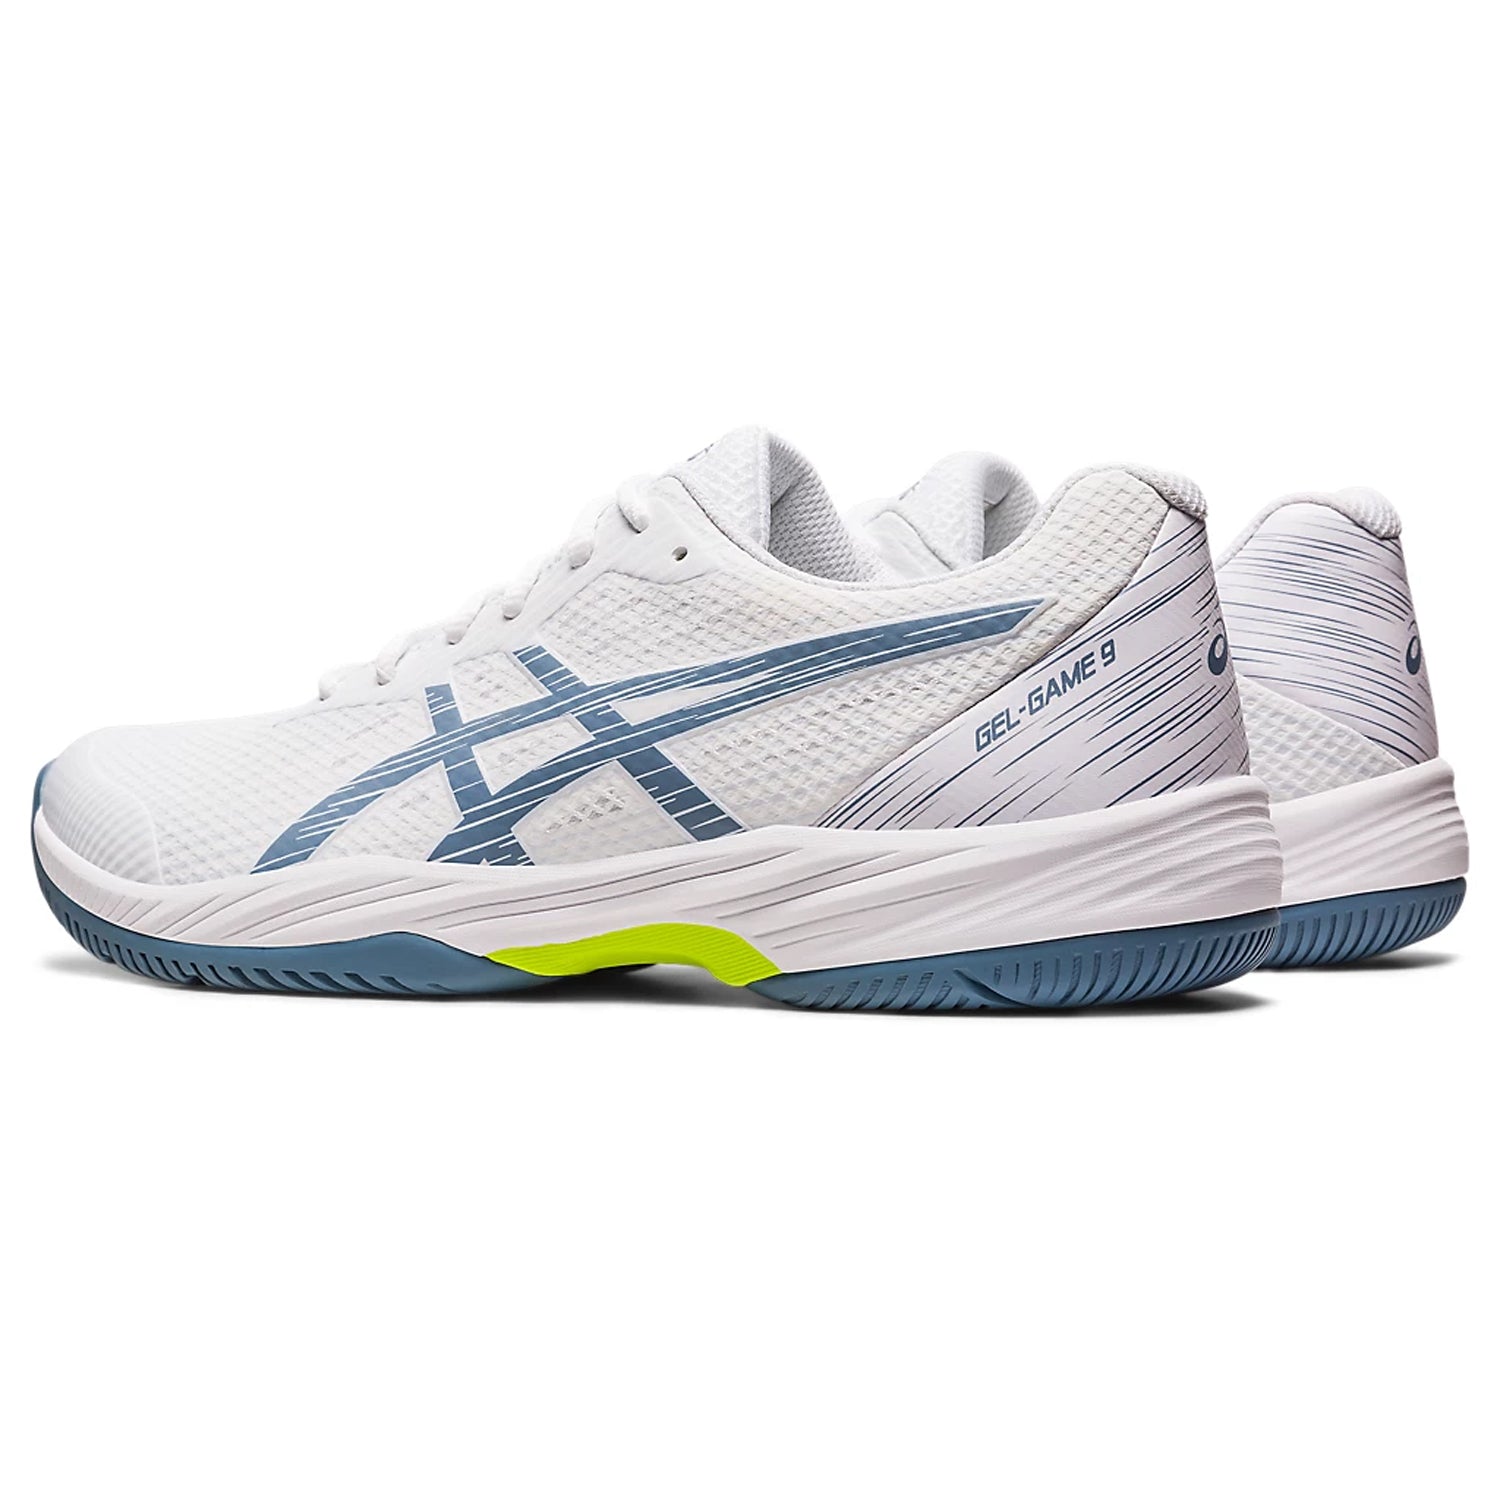 Asics GEL-GAME 9 Men's Tennis Shoes, White/Steel Blue - Best Price online Prokicksports.com